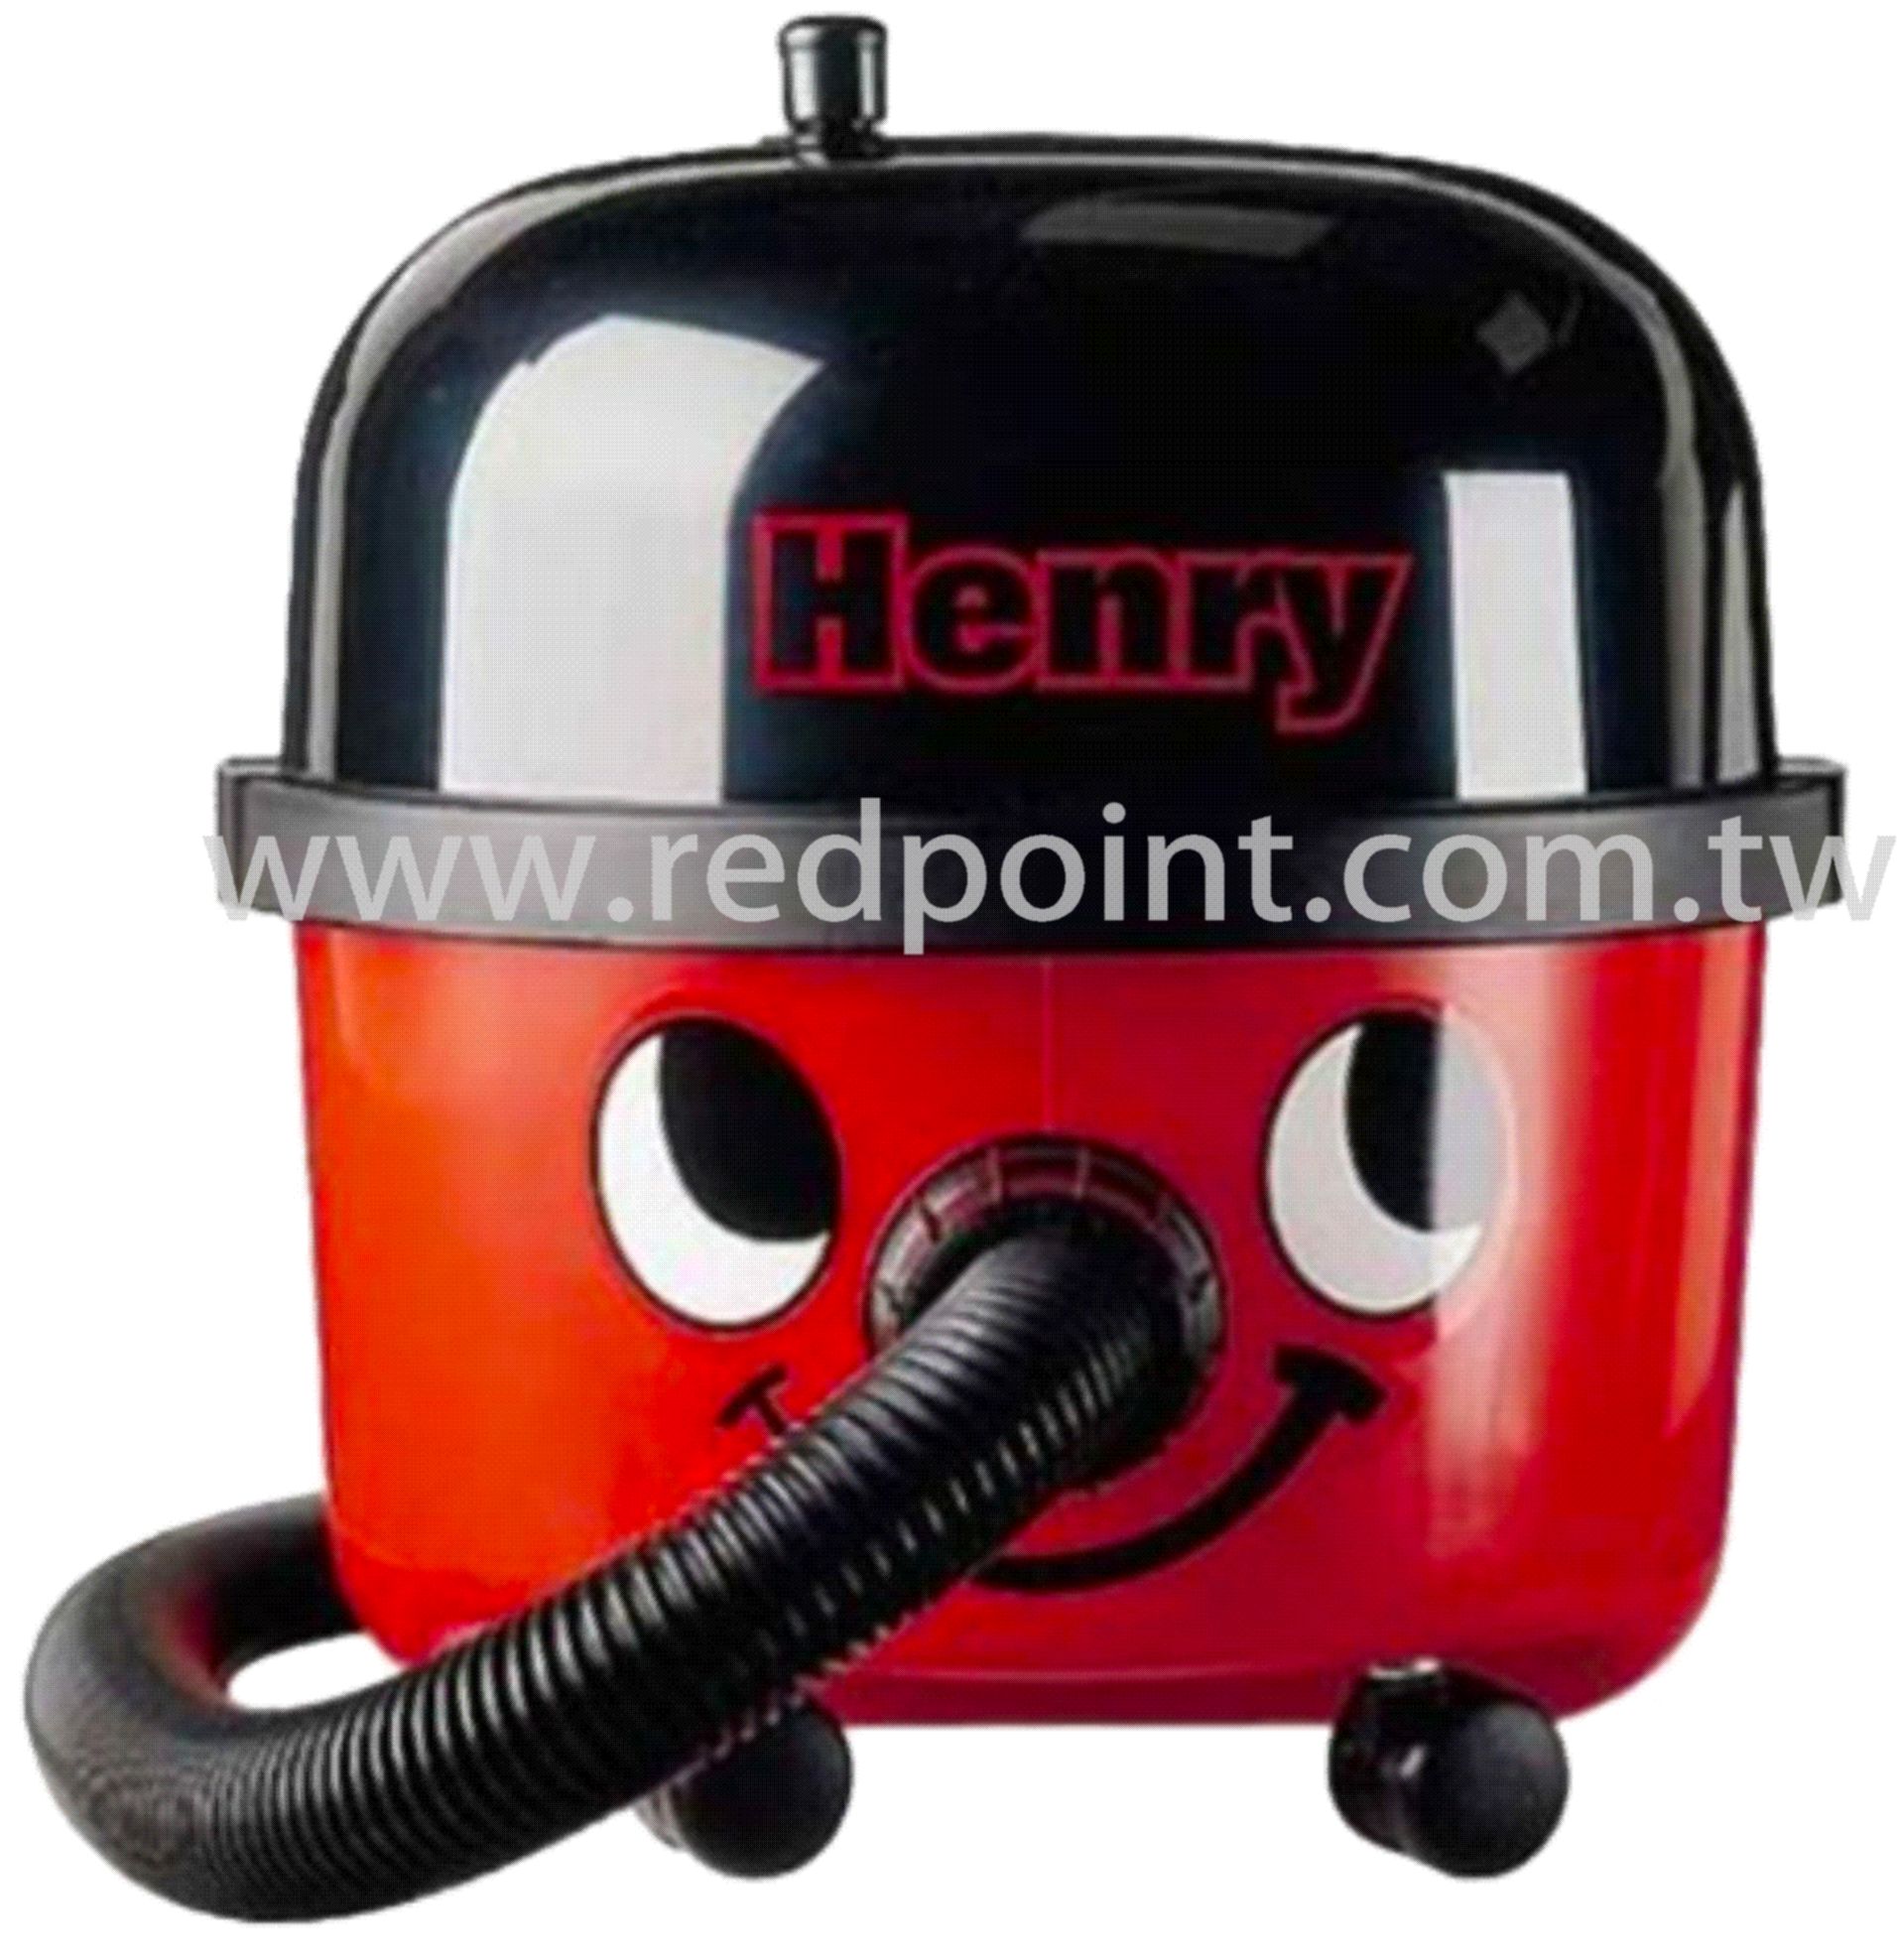 HENRY,henry,乾式,吸塵器,乾式吸塵器,紅點,清潔用品